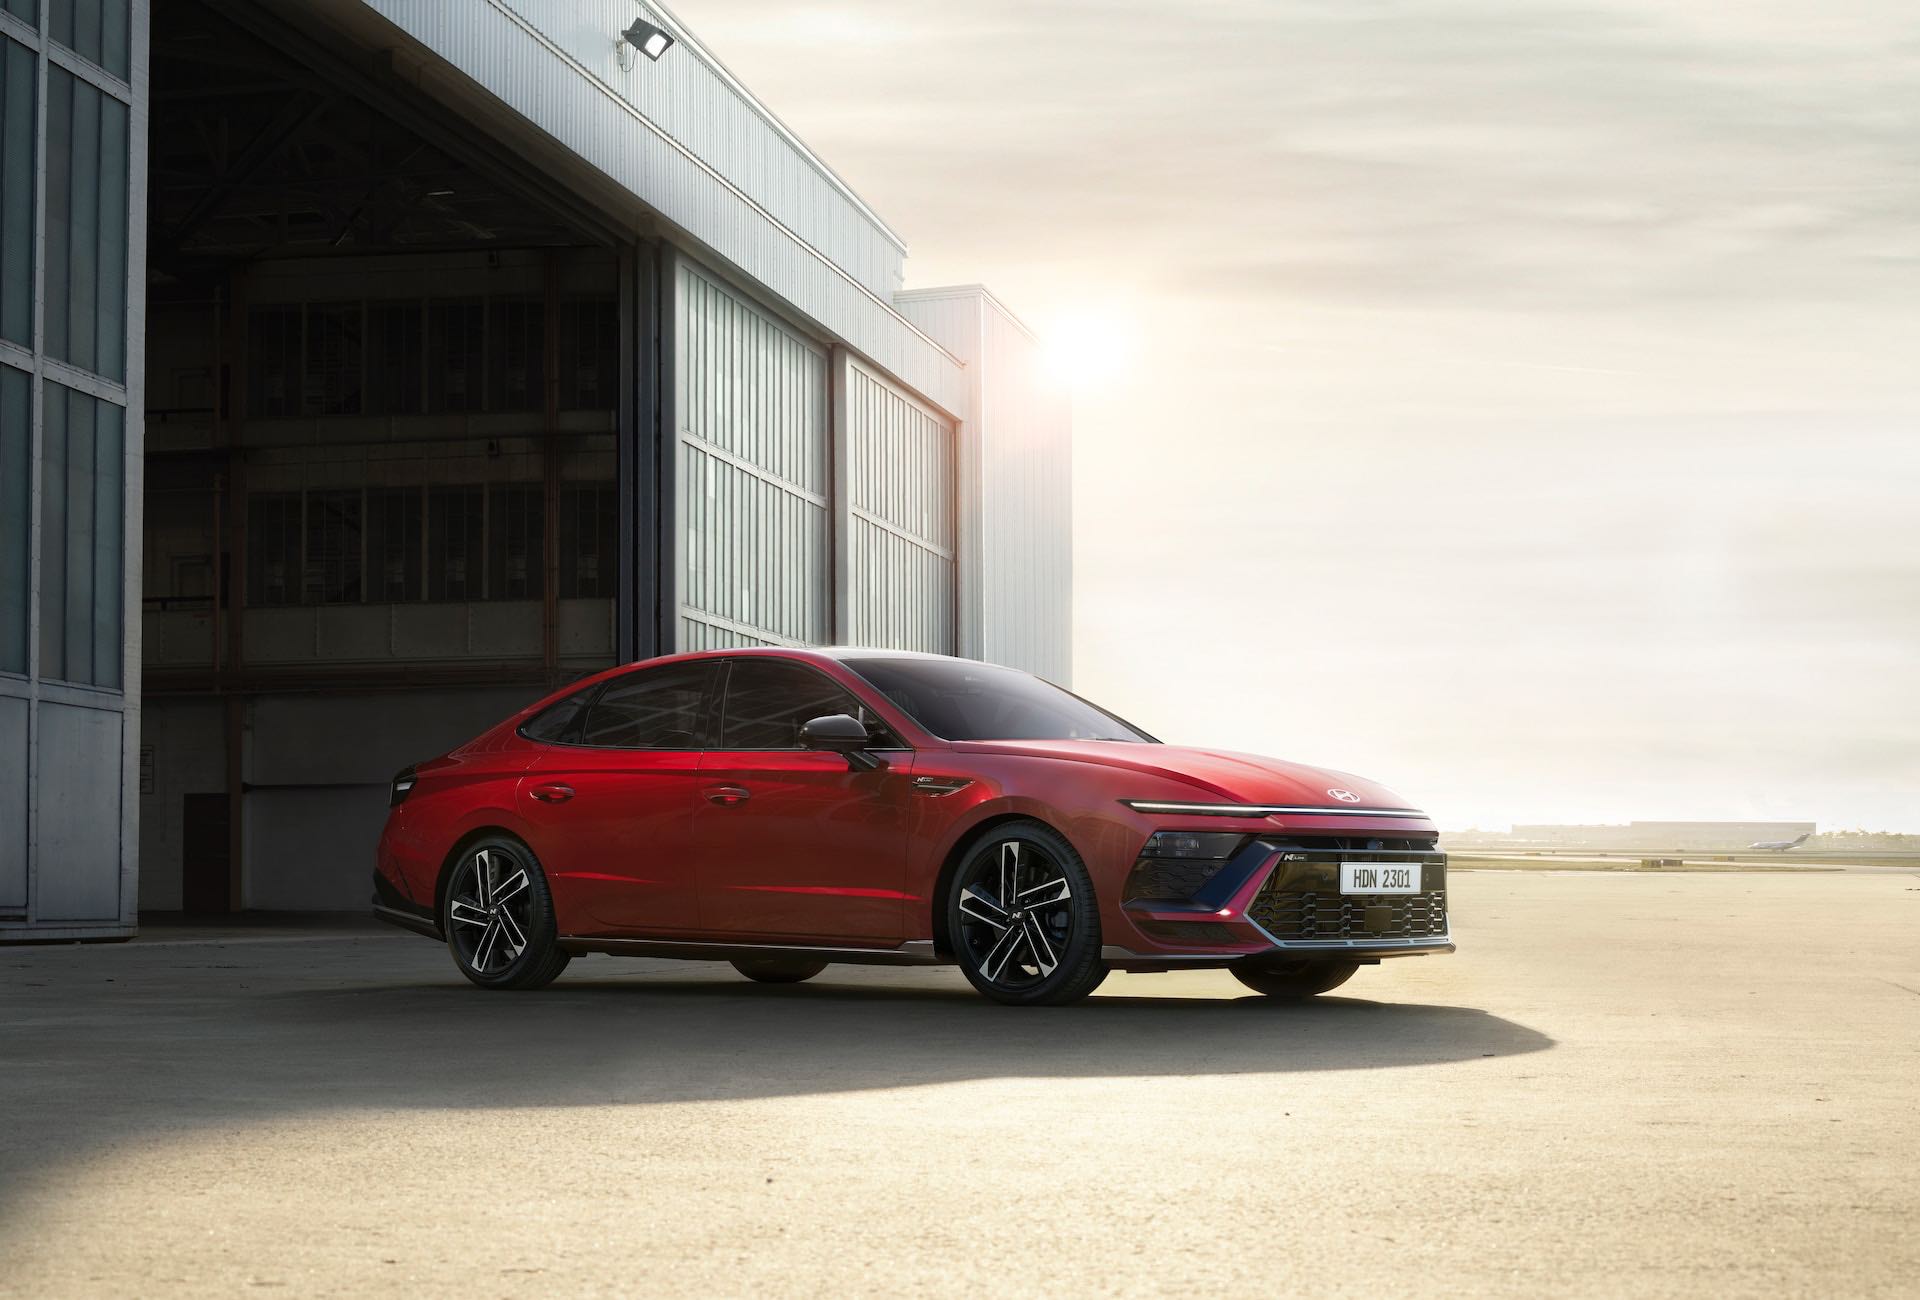 2. 2023 Hyundai Sonata: The Perfect Balance of Style and Efficiency